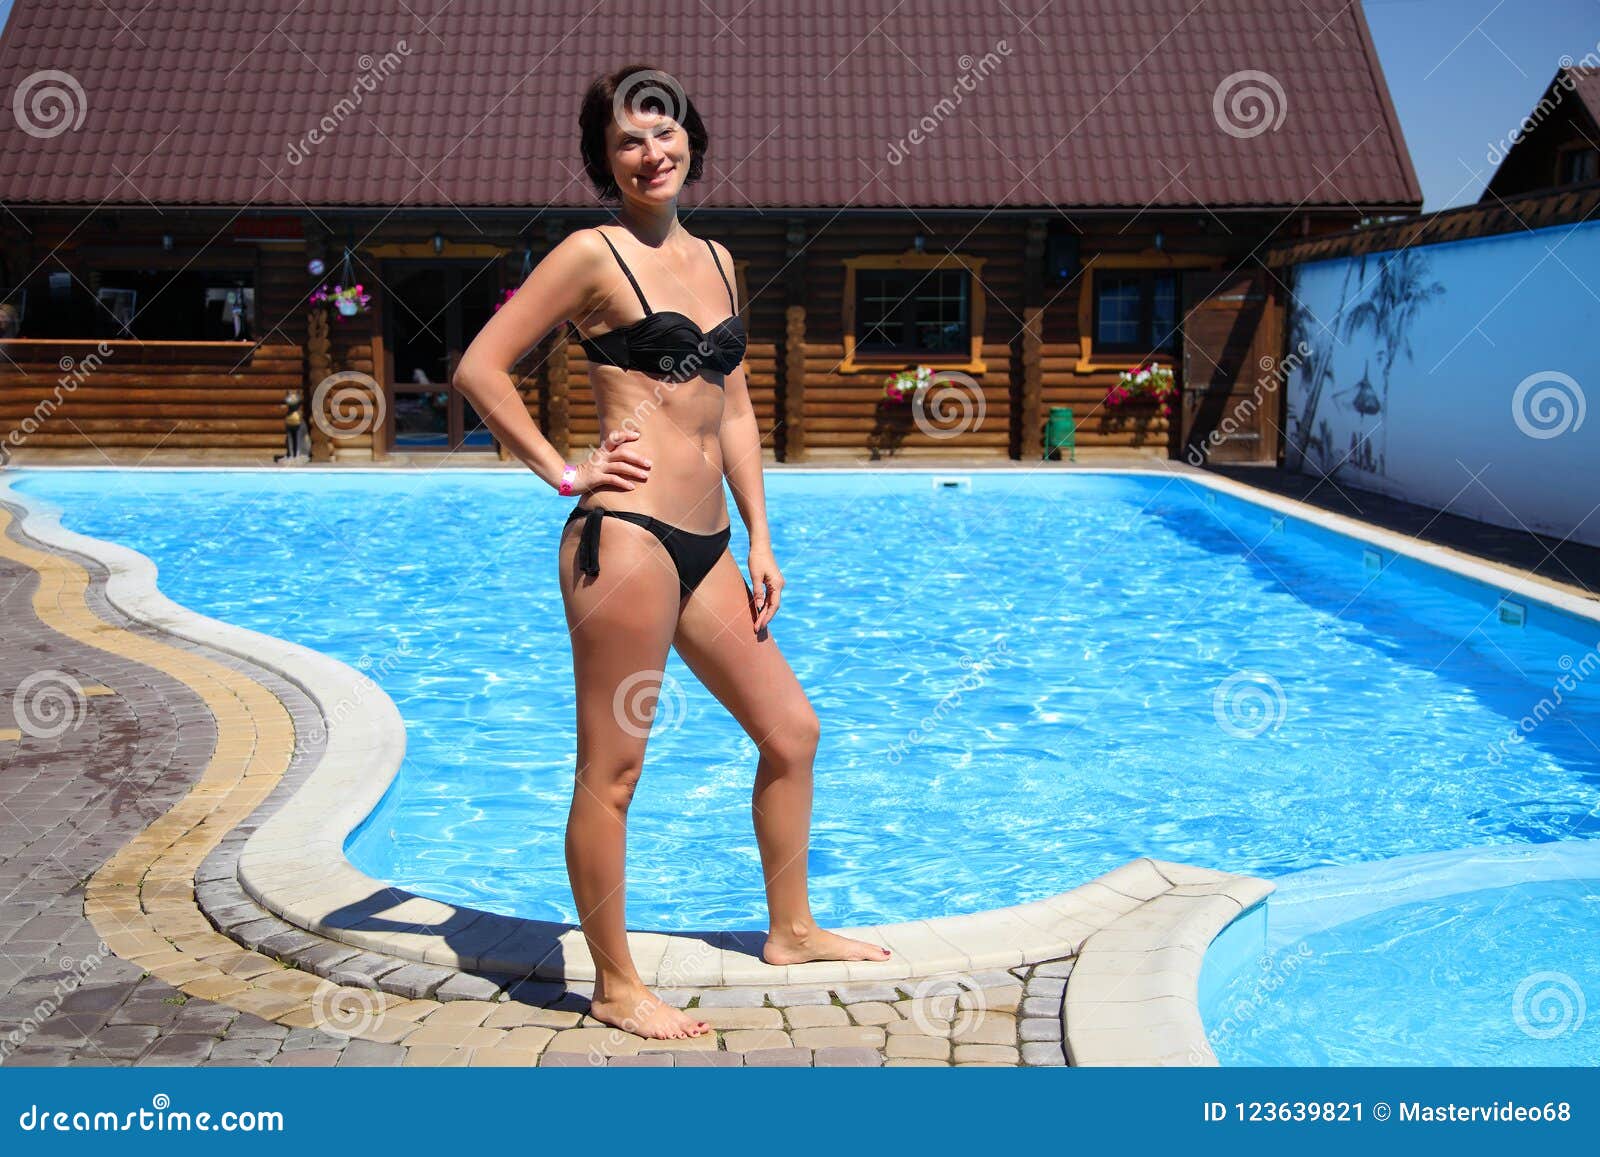 Woman in the Pool. Beautiful Woman in Pool Stock Image - Image of outdoors,  beautiful: 123639821